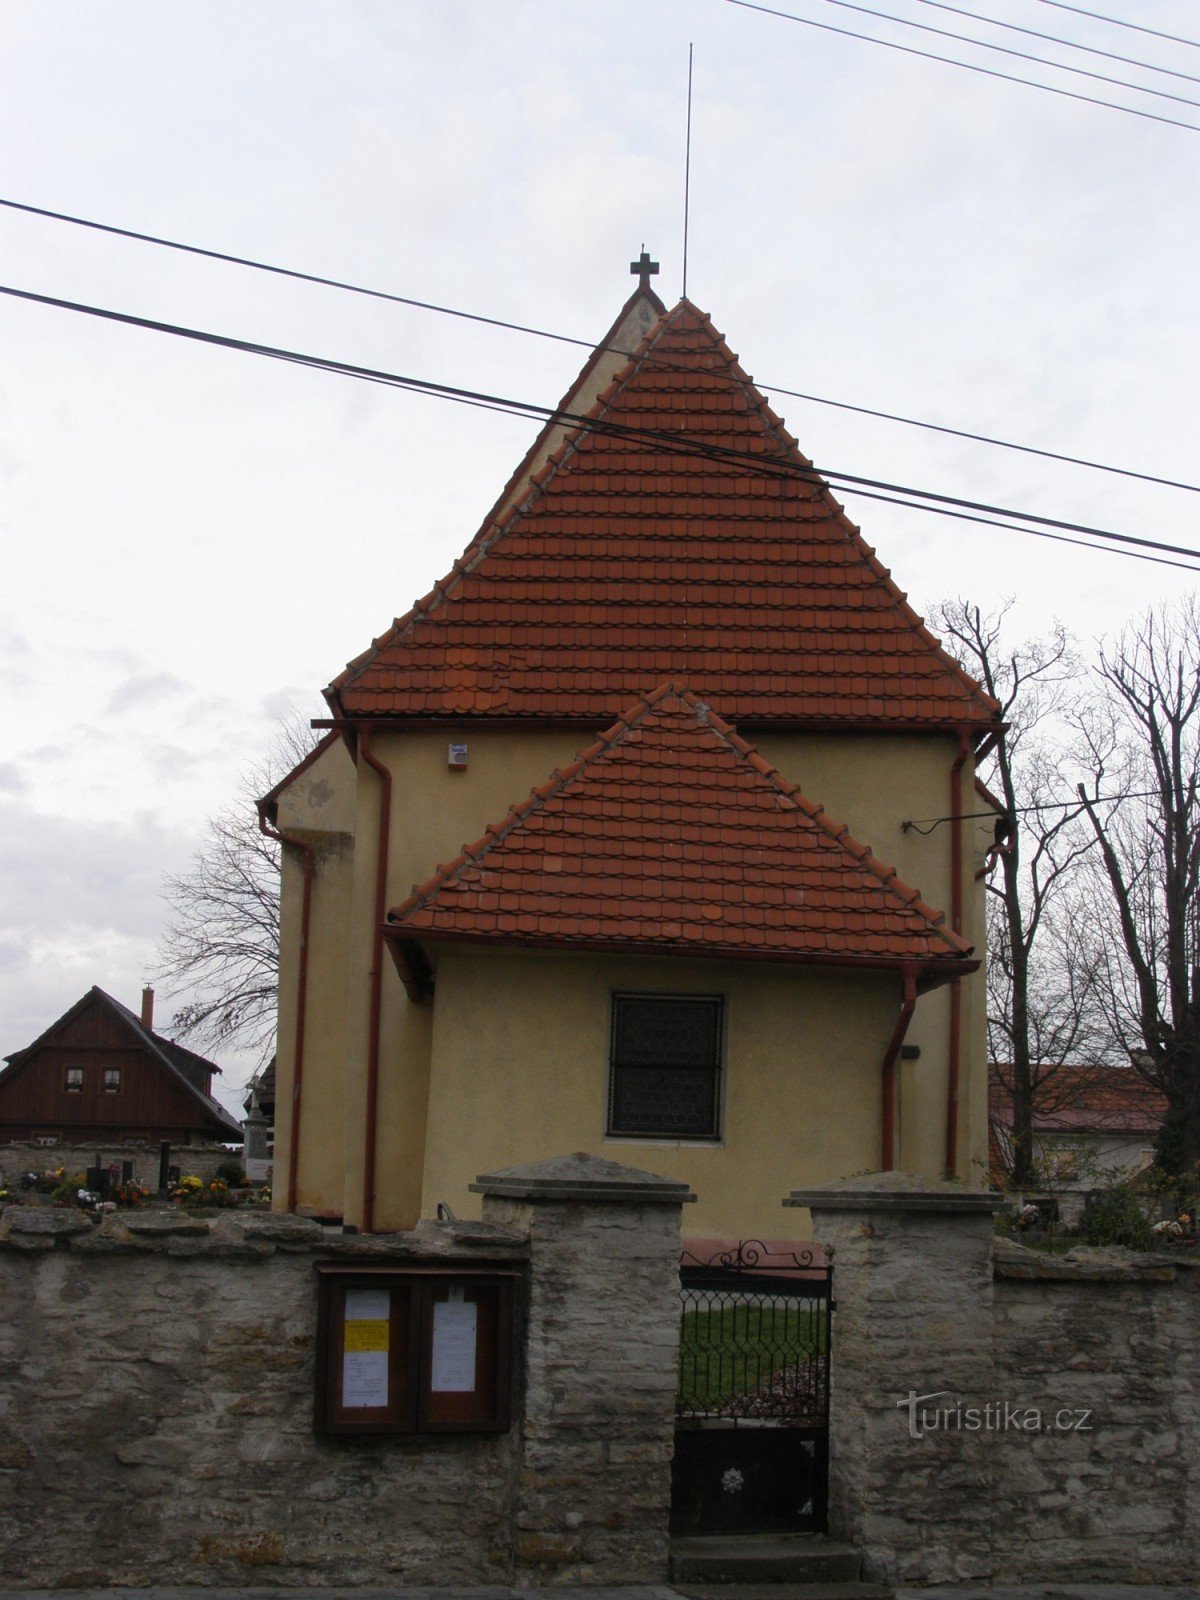 Rohenice - Iglesia de St. Juan el Bautista